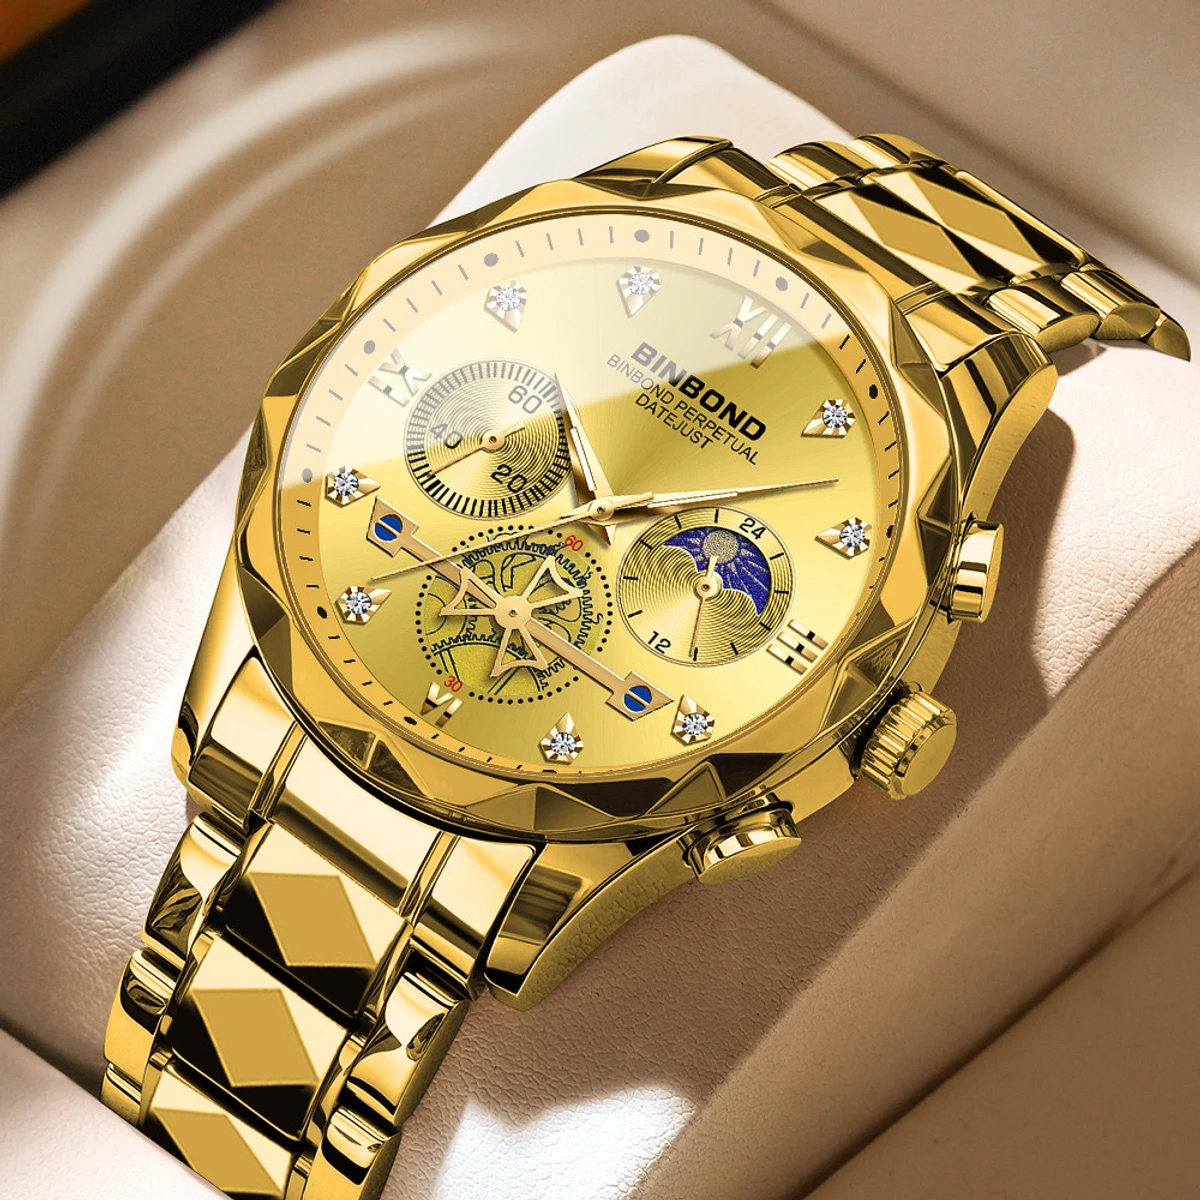 New Luxury Diamond Watch For Men Stainless Steel Waterproof Chronograph Luminous Date Business Sport Wristwatches- Golden